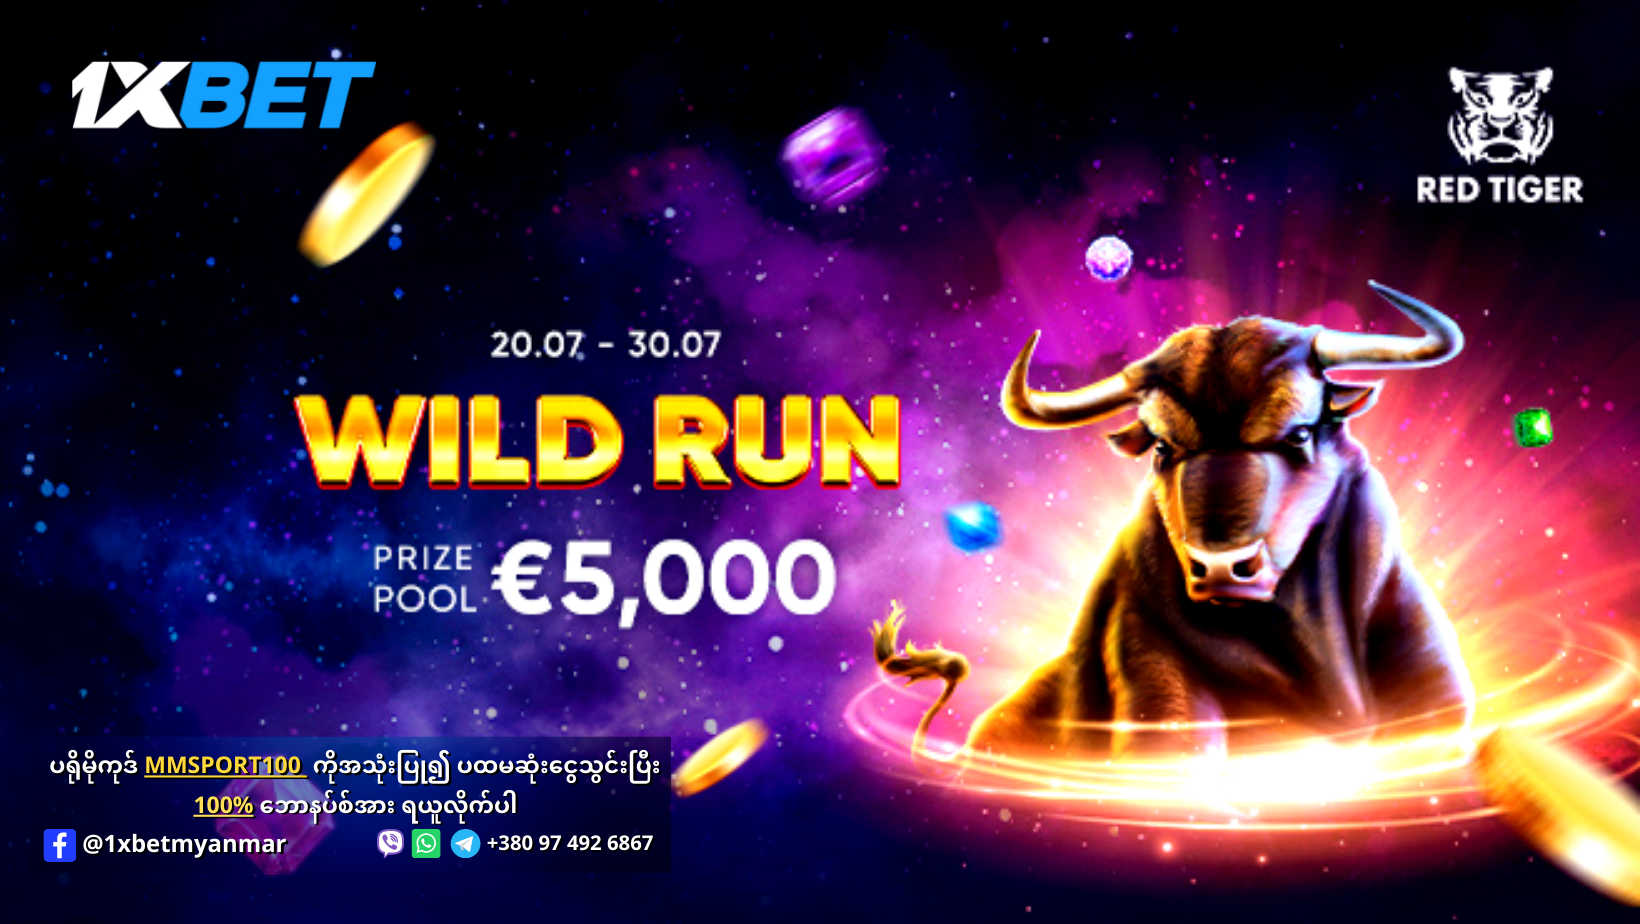 Wild Run 1xBet Promotion